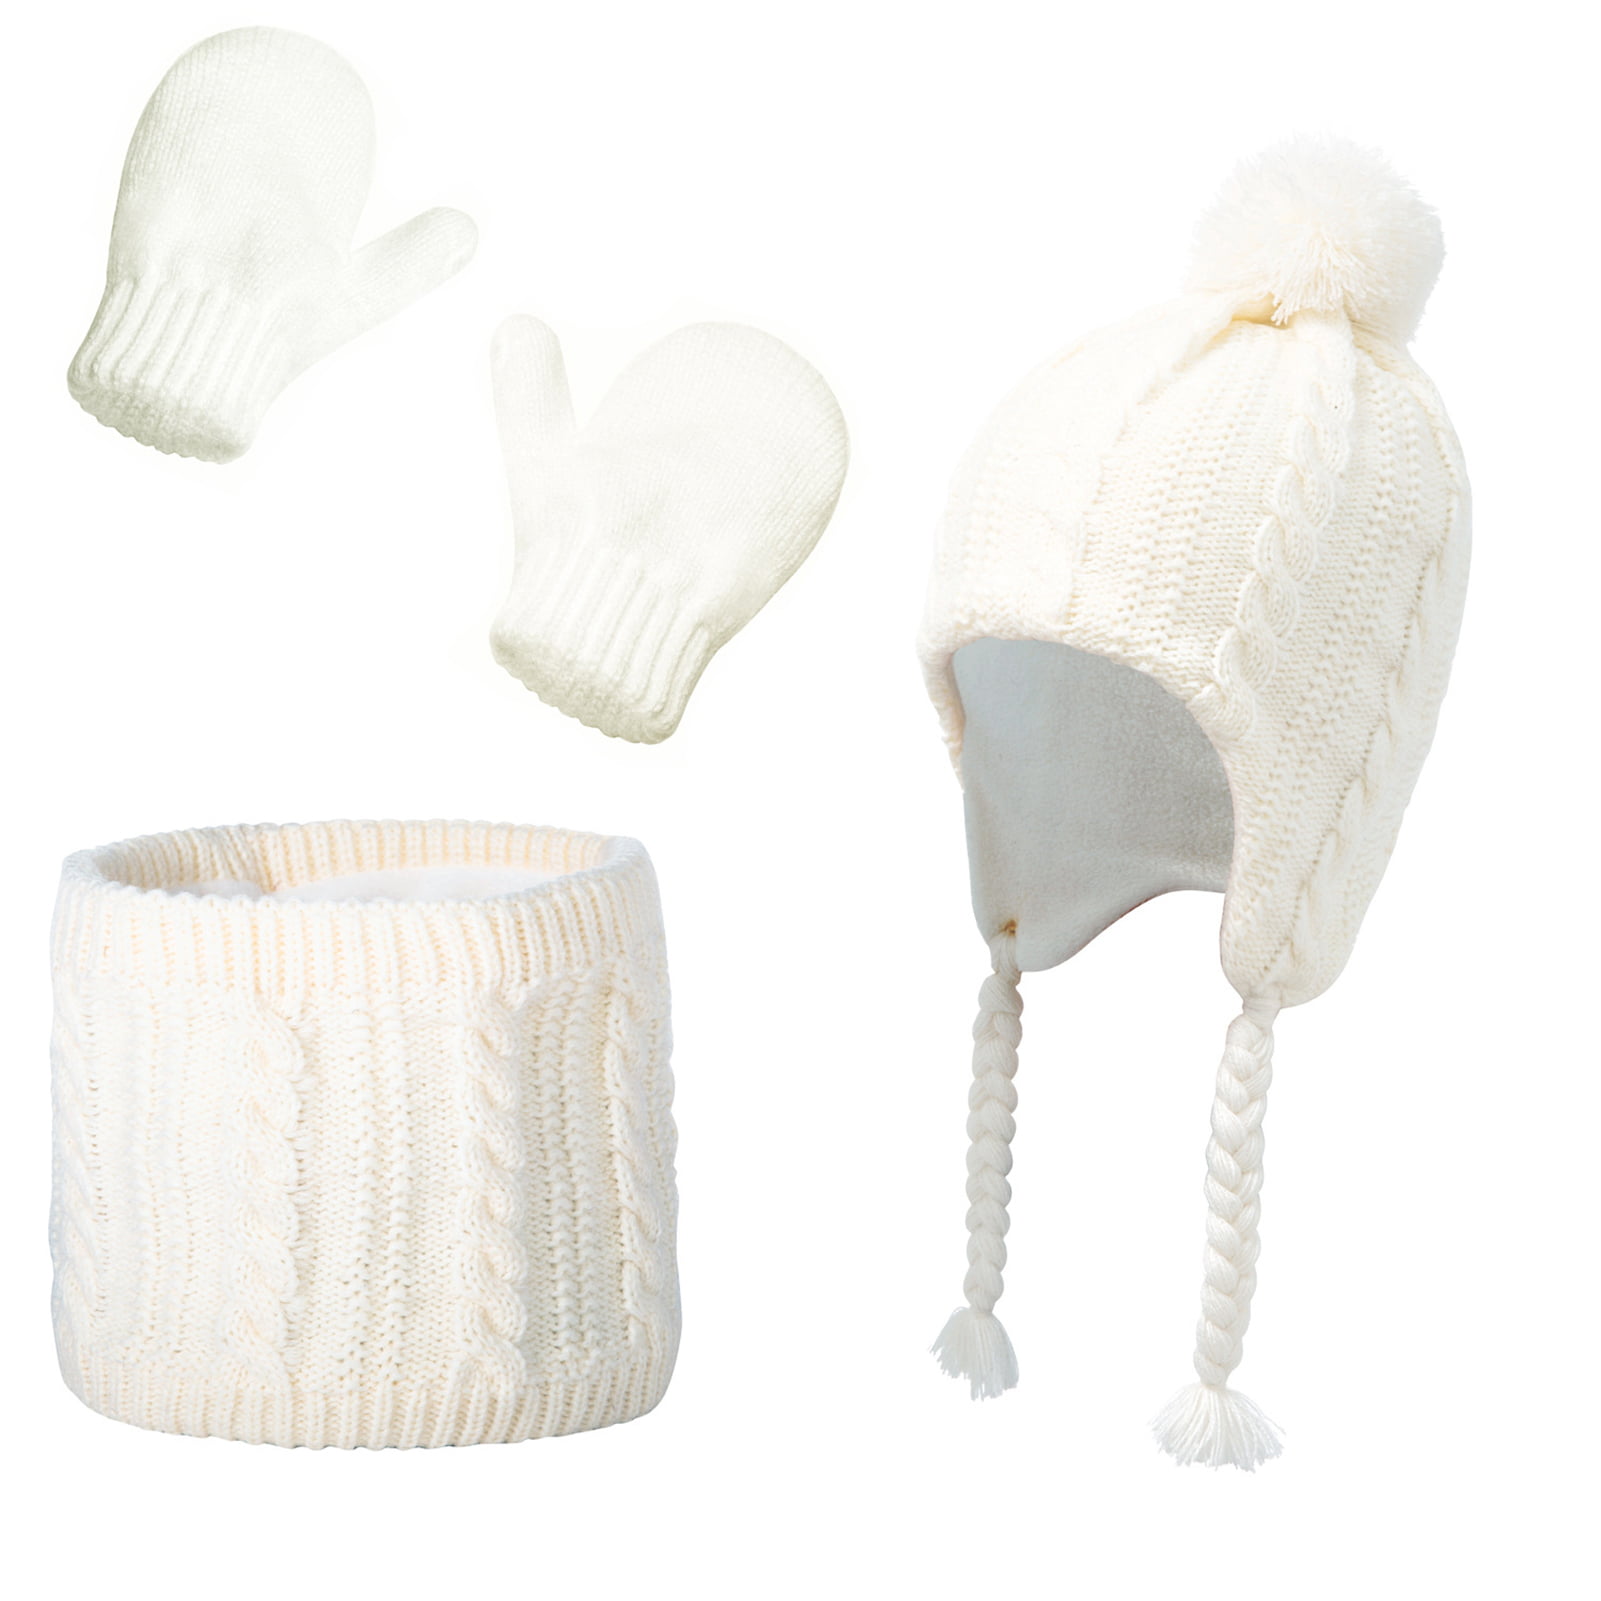 CMTOP 3 in 1 Warm Beanie Hat Scarf Gloves Set for Kids Winter Thicken Fleece Thermal Knit Winter Beanie Hat Snood Thermal Knit Gloves Hat Scarf and Gloves set with thick Fleece for Boys Girls 